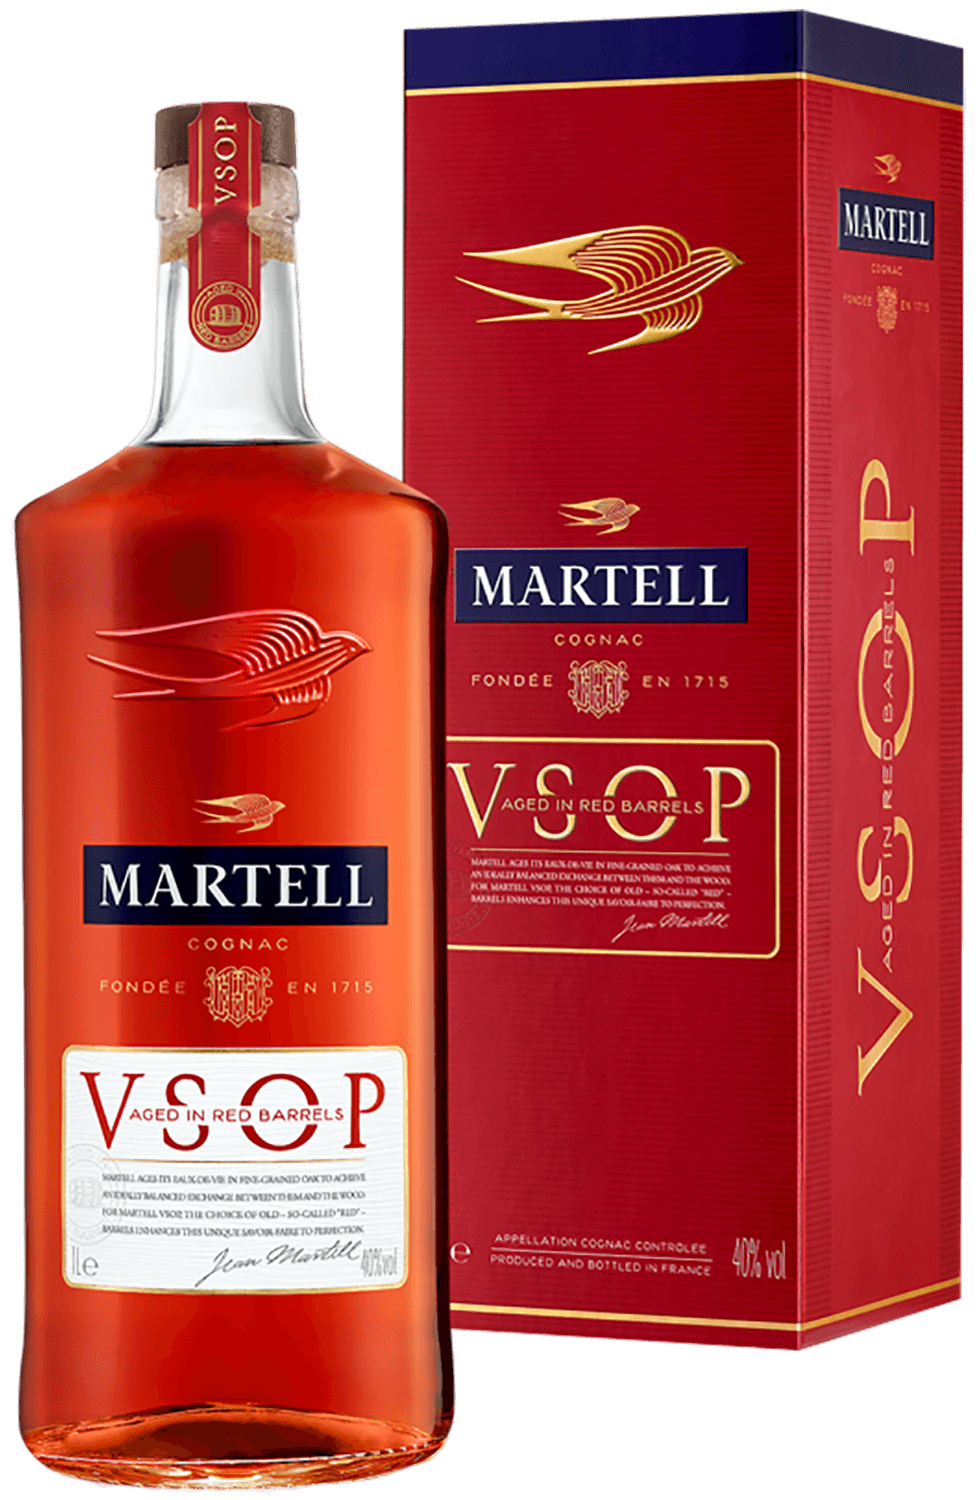 Martell VSOP Aged in Red Barrels (gift box)